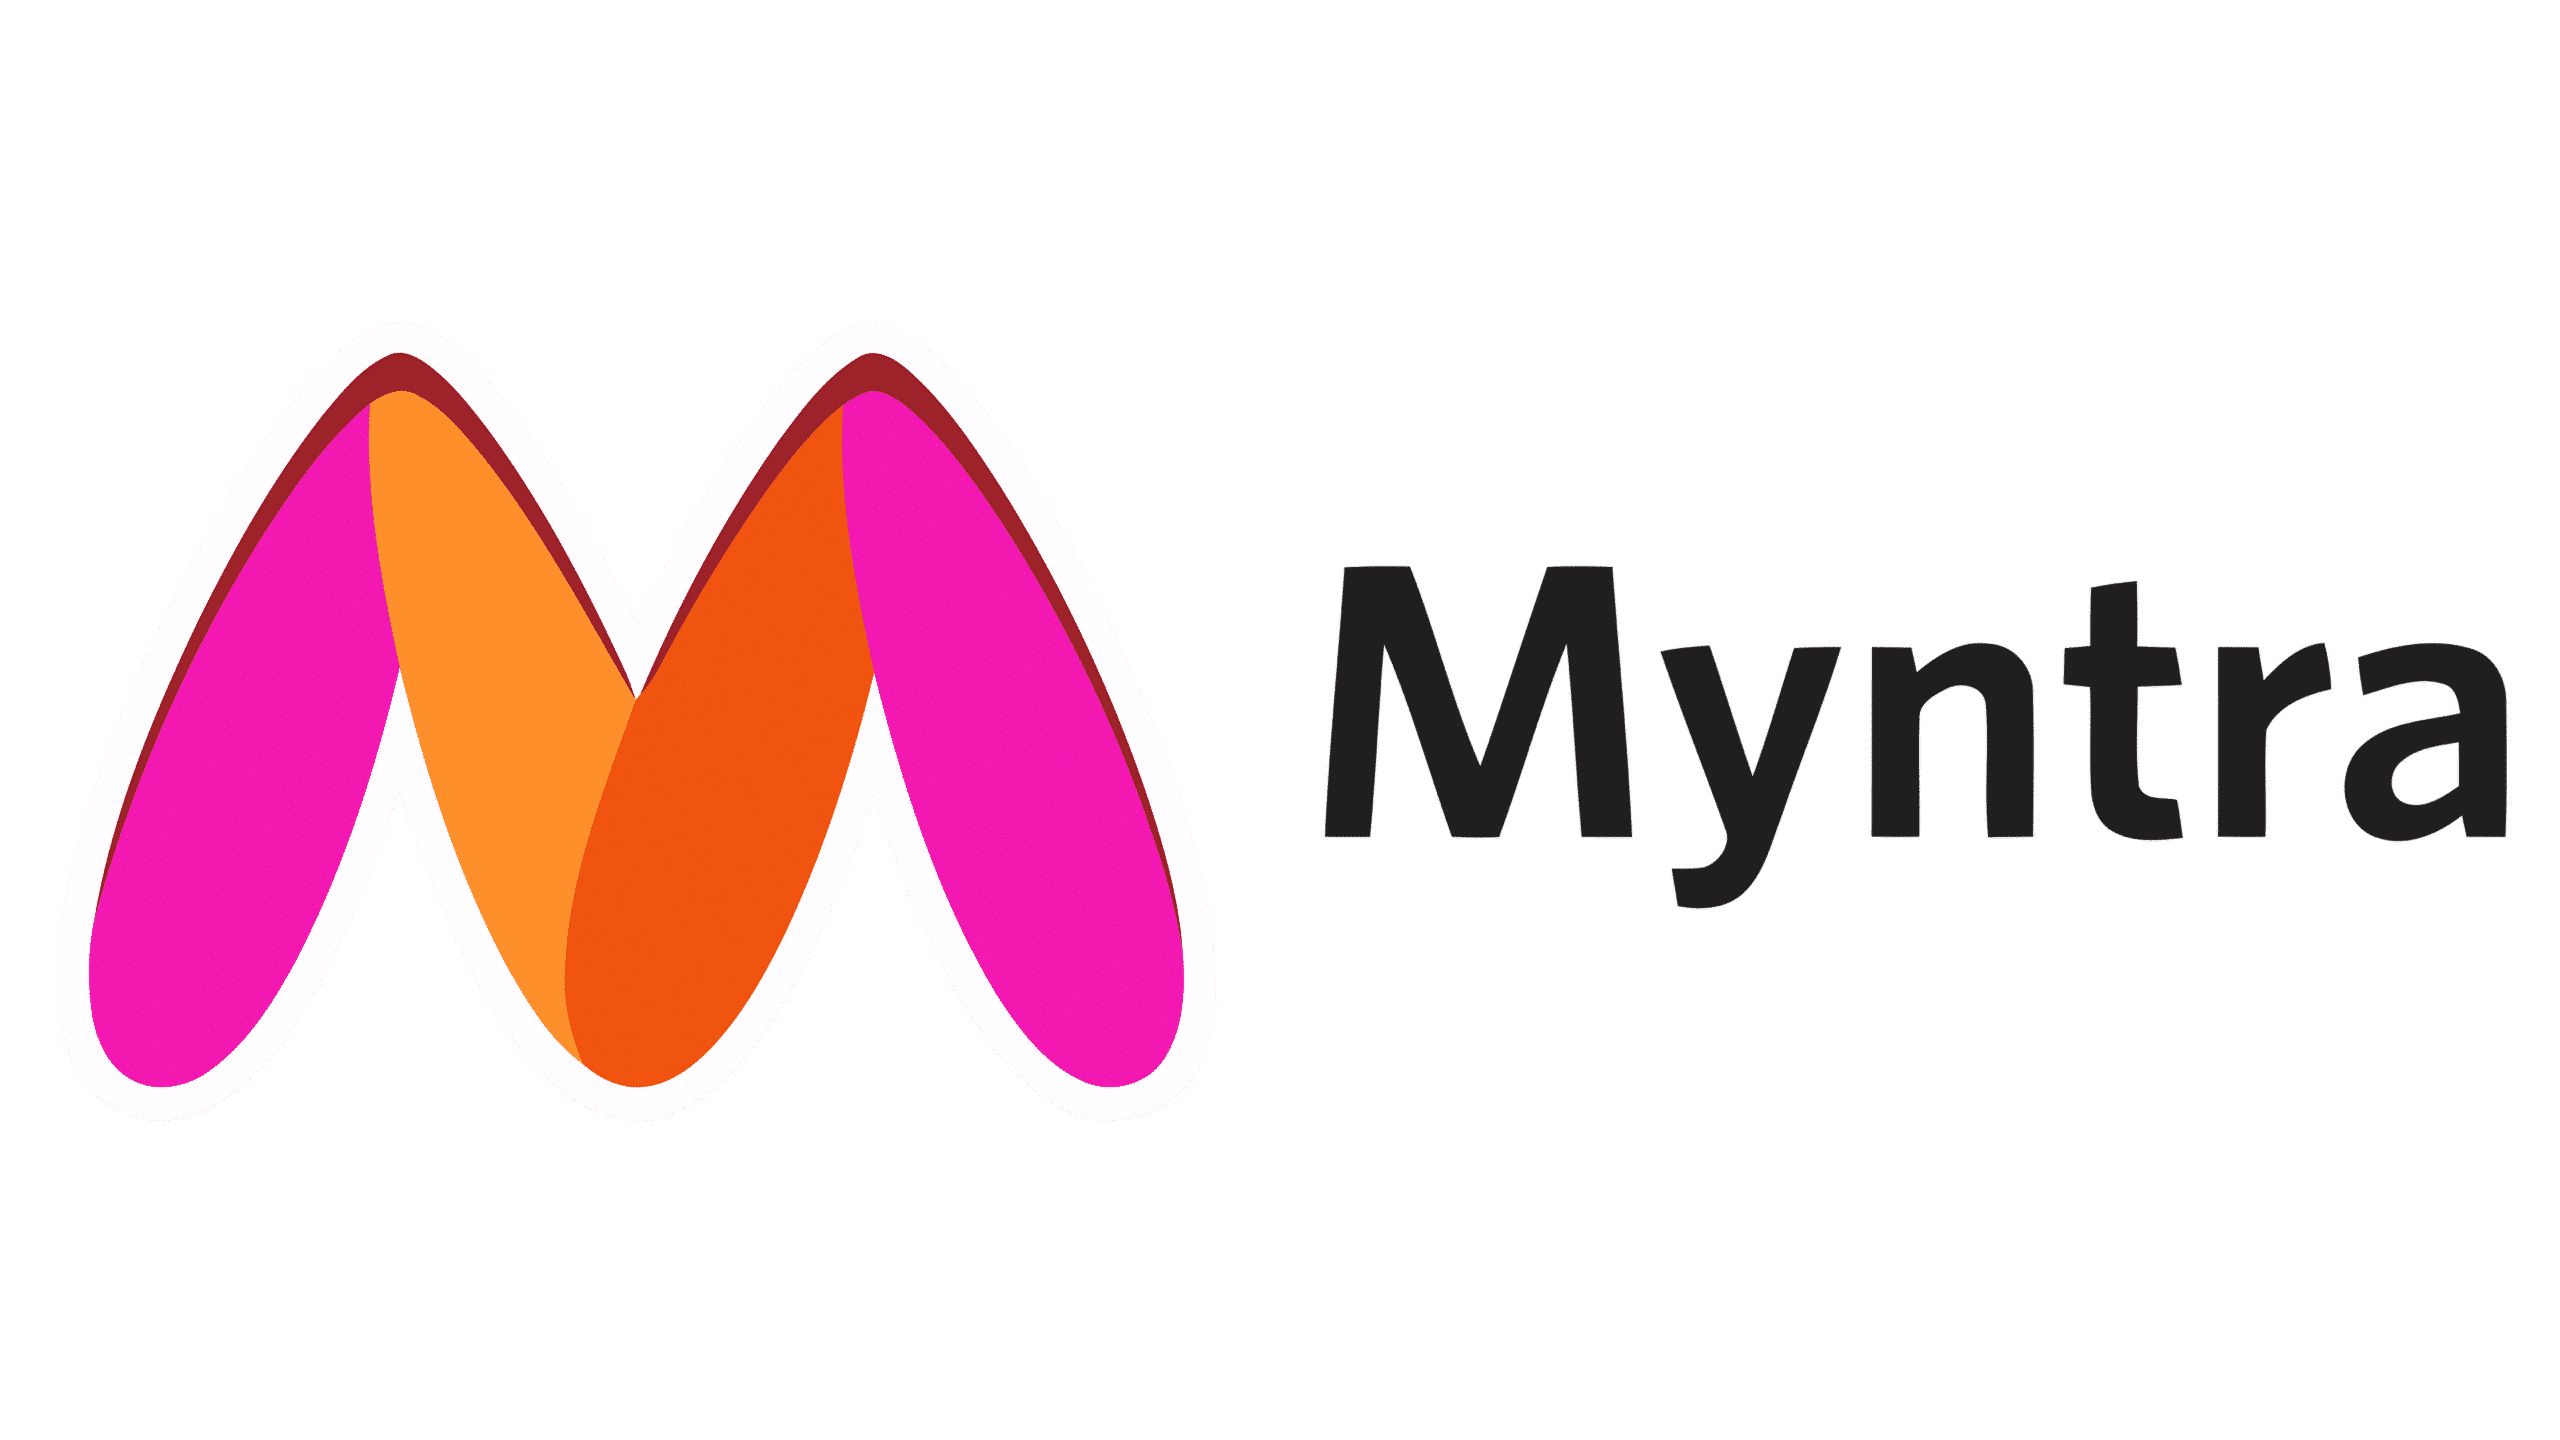 Myntra-Logo.png